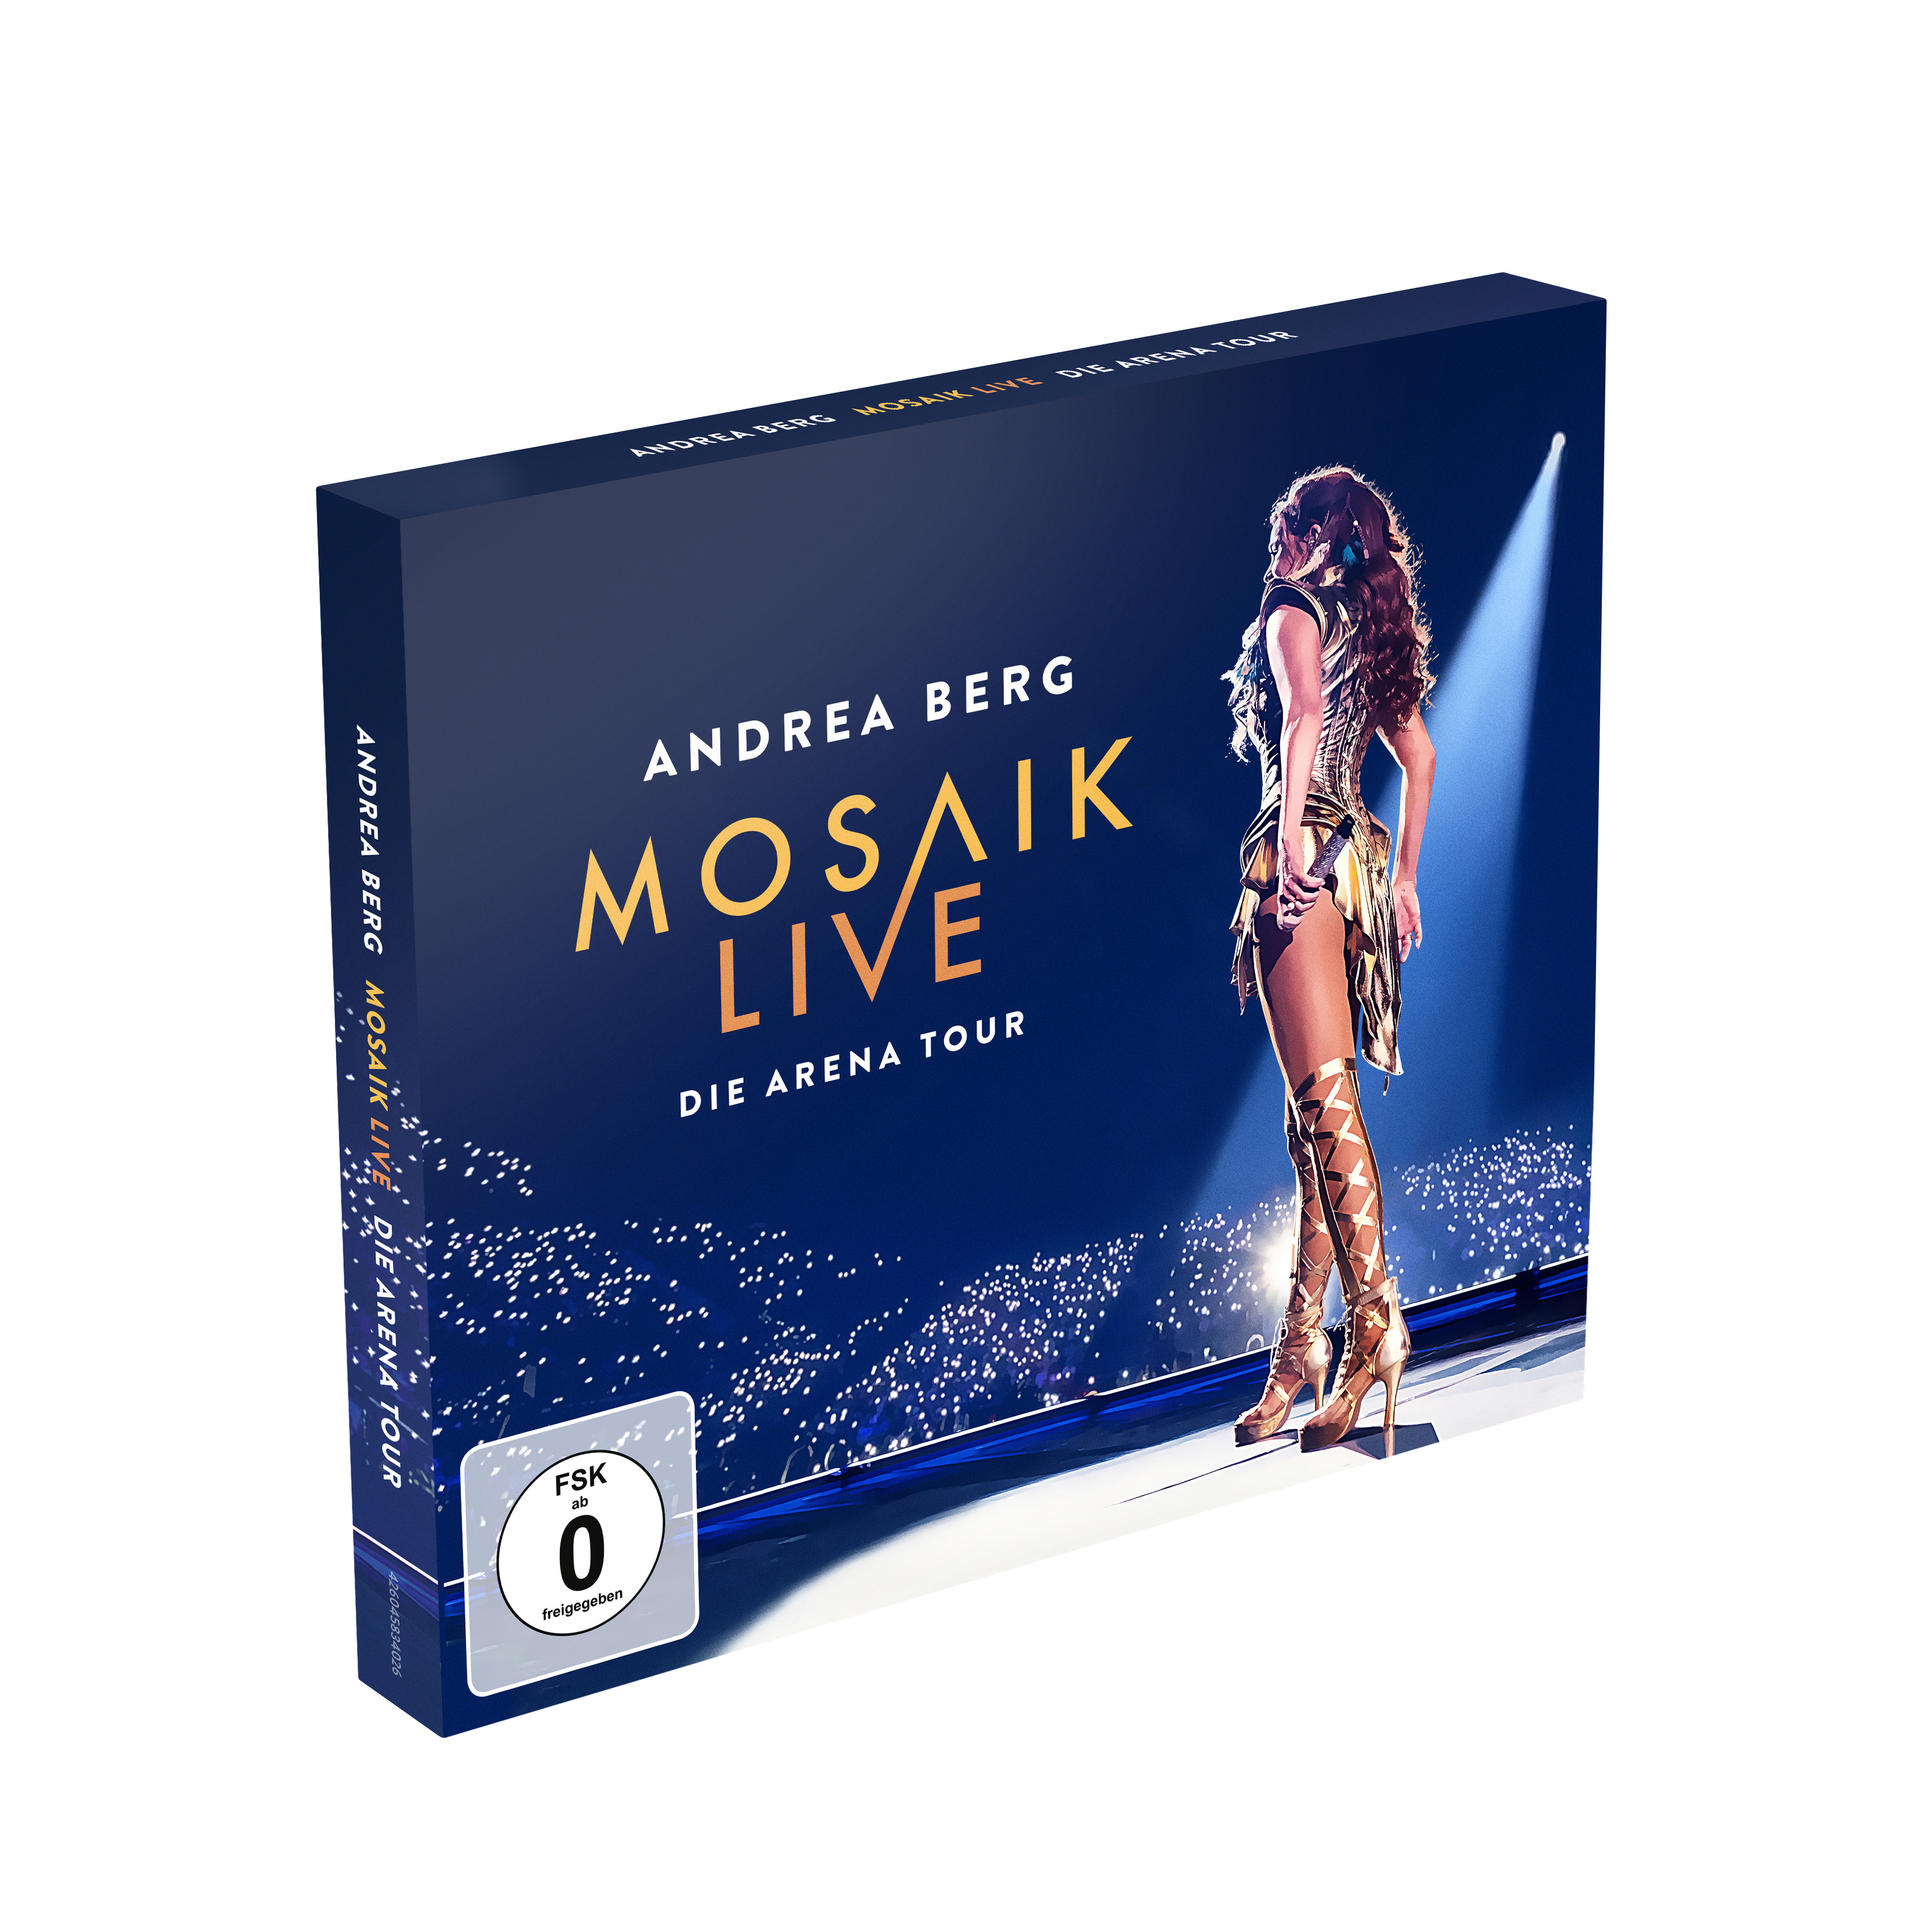 Andrea Berg + Mosaik Video) - Tour Live-Die Arena (CD - DVD